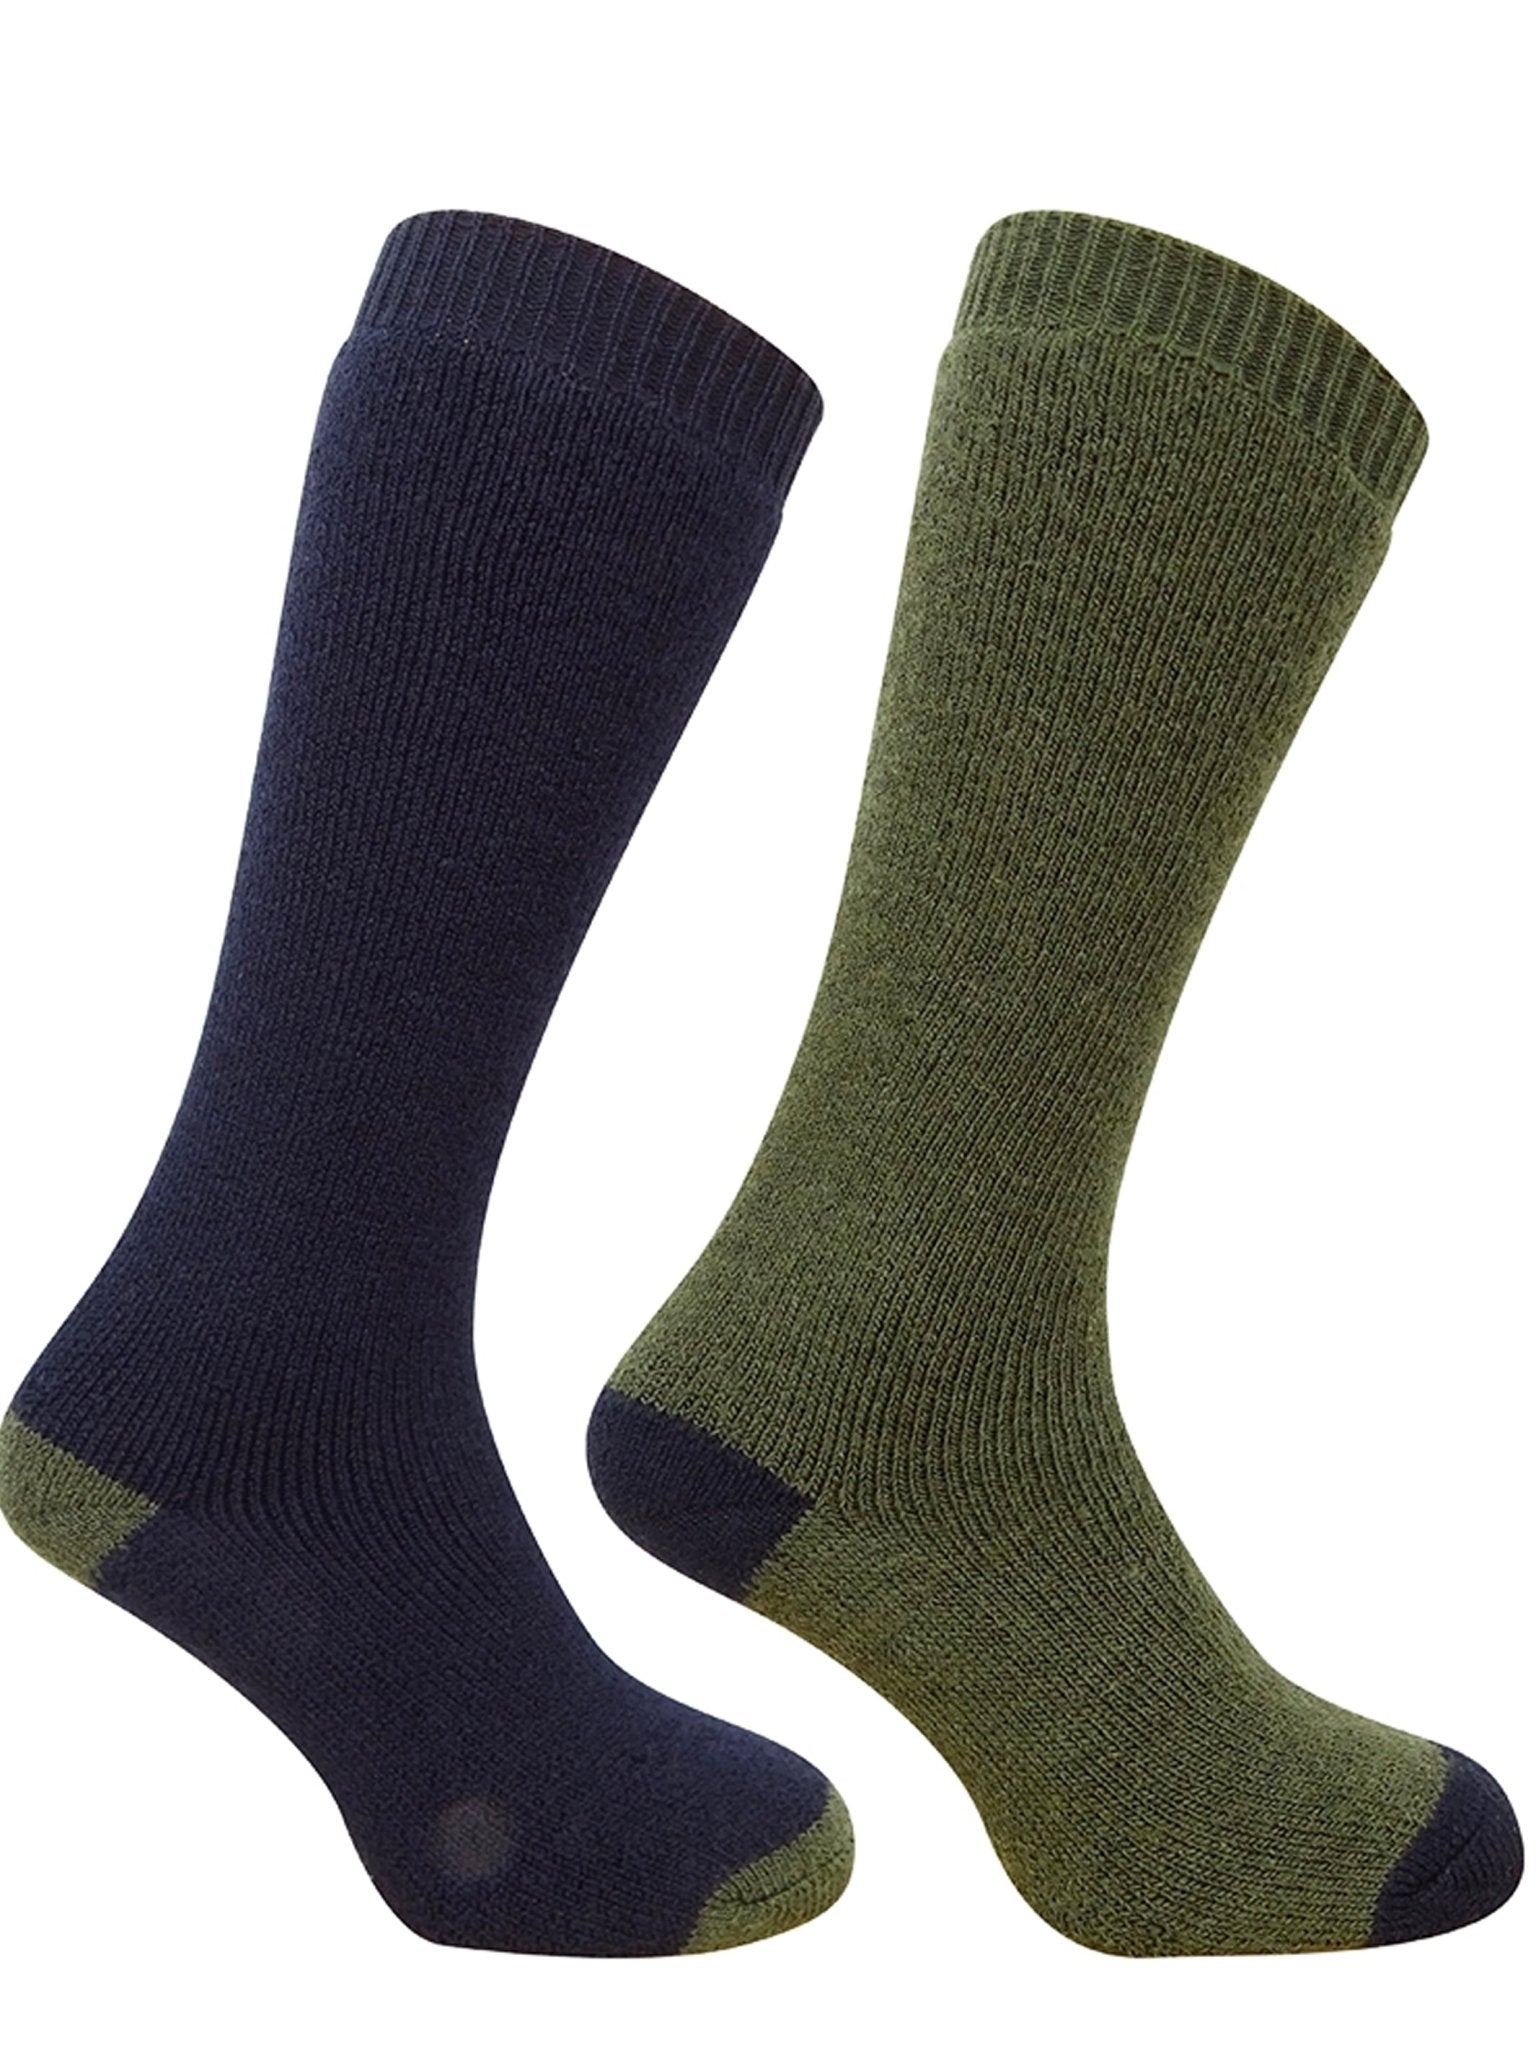 4elementsclothingHoggs of FifeHoggs of Fife - 1903 Long Country Socks - outdoor merino wool Socks (Twin Pack Mens sock)Socks1903/NG/1